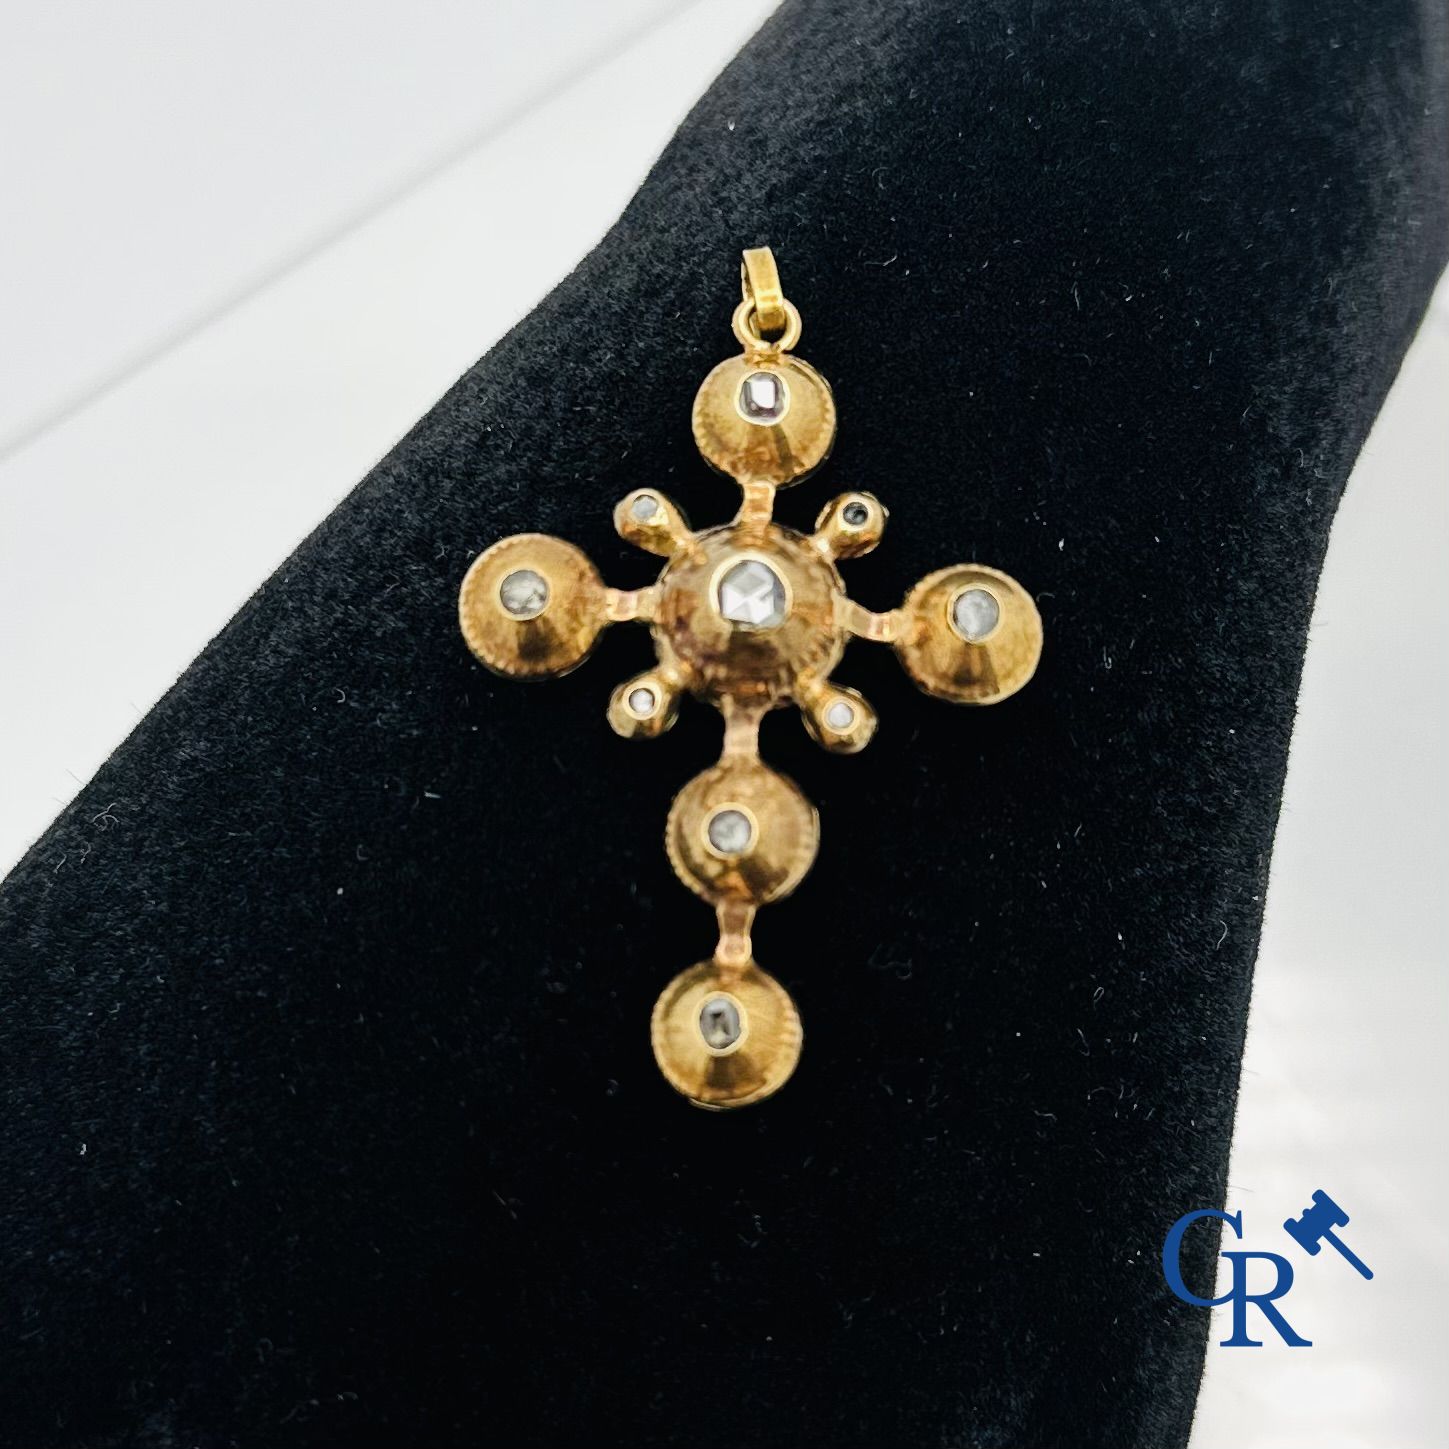 Jewellery: Flemish cross in gold 18K set with diamonds.